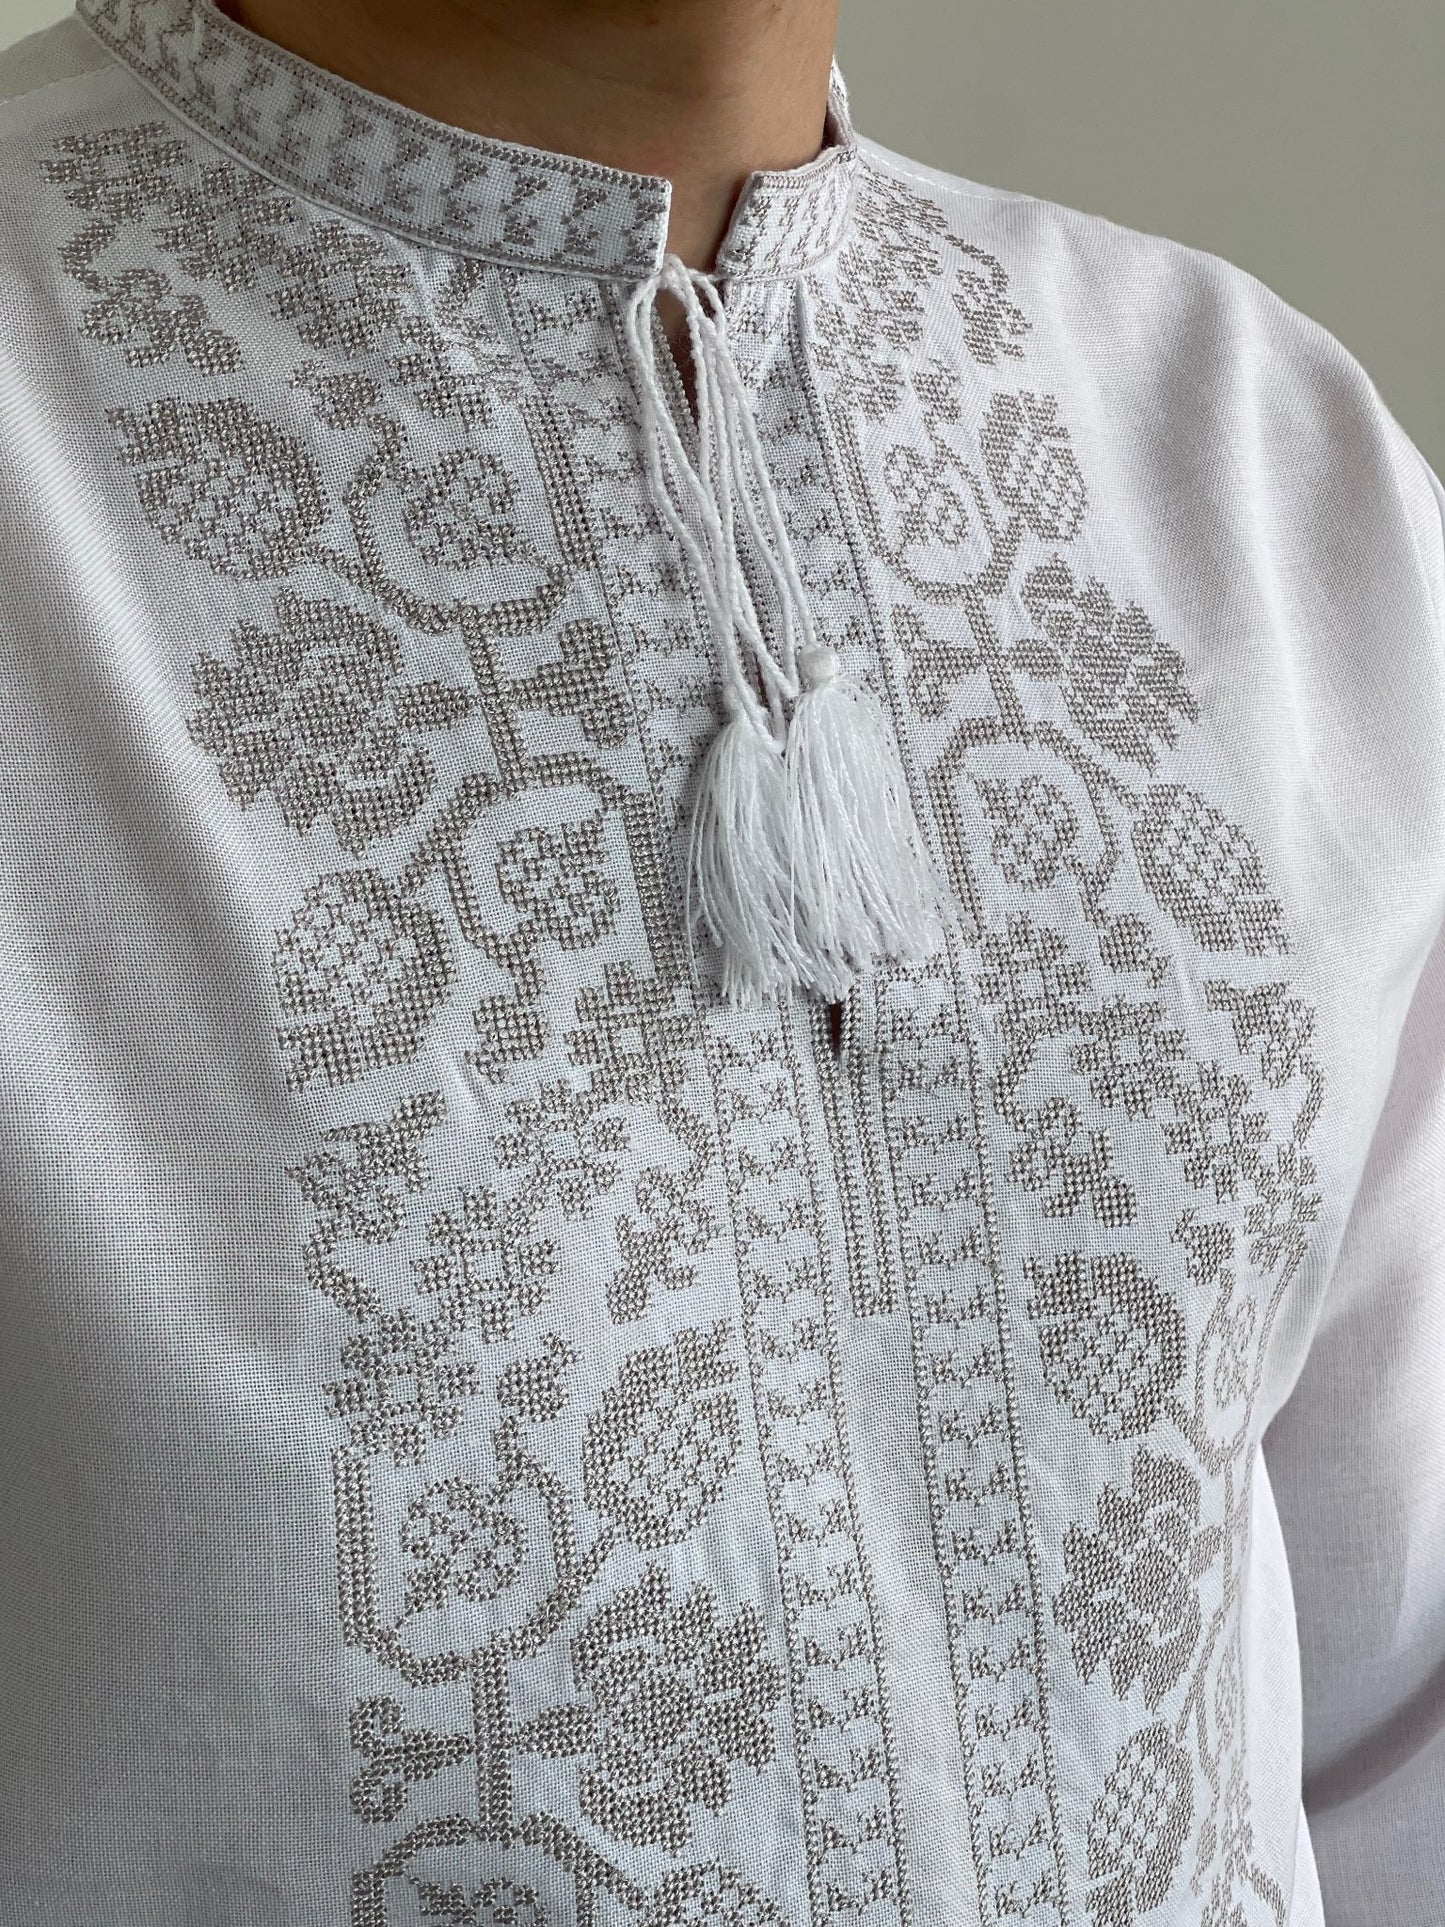 White Men's Vyshyvanka Shirt with Light Beige Embroidery